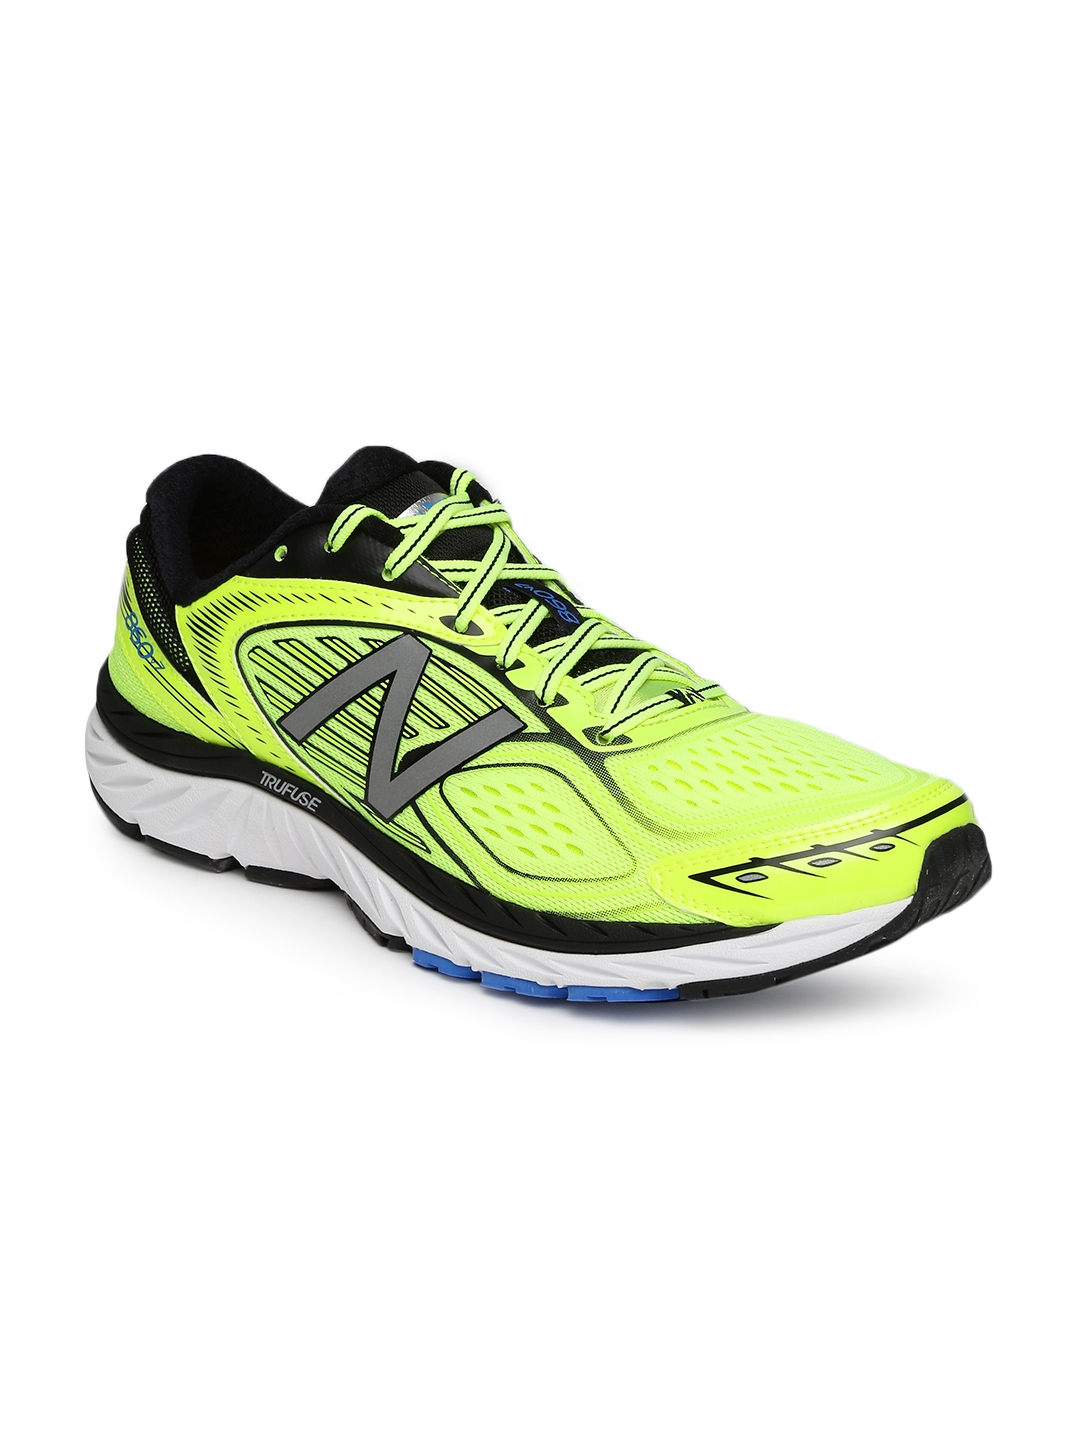 Buy New Balance Men Fluorescent Green 860 Running Shoes - Shoes for Men 1794244 | Myntra